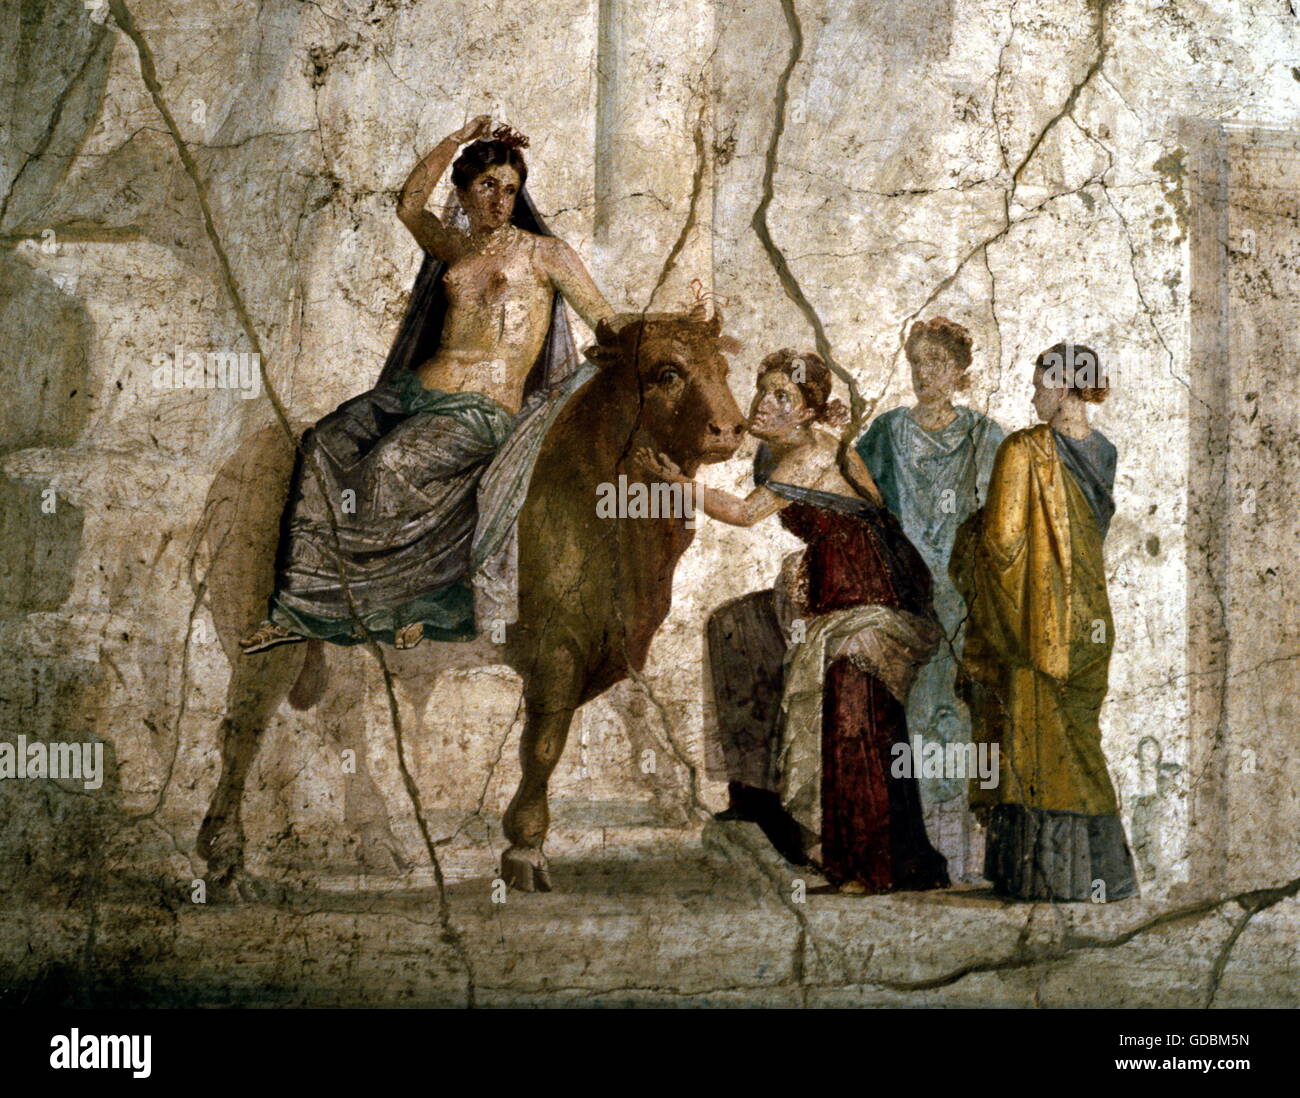 Europa, figura legendaria griega, hija de Agenor, secuestrada por Zeus como taurus, fresco, Pompeya, siglo I DC, Museo Nacional de Nápoles, Foto de stock